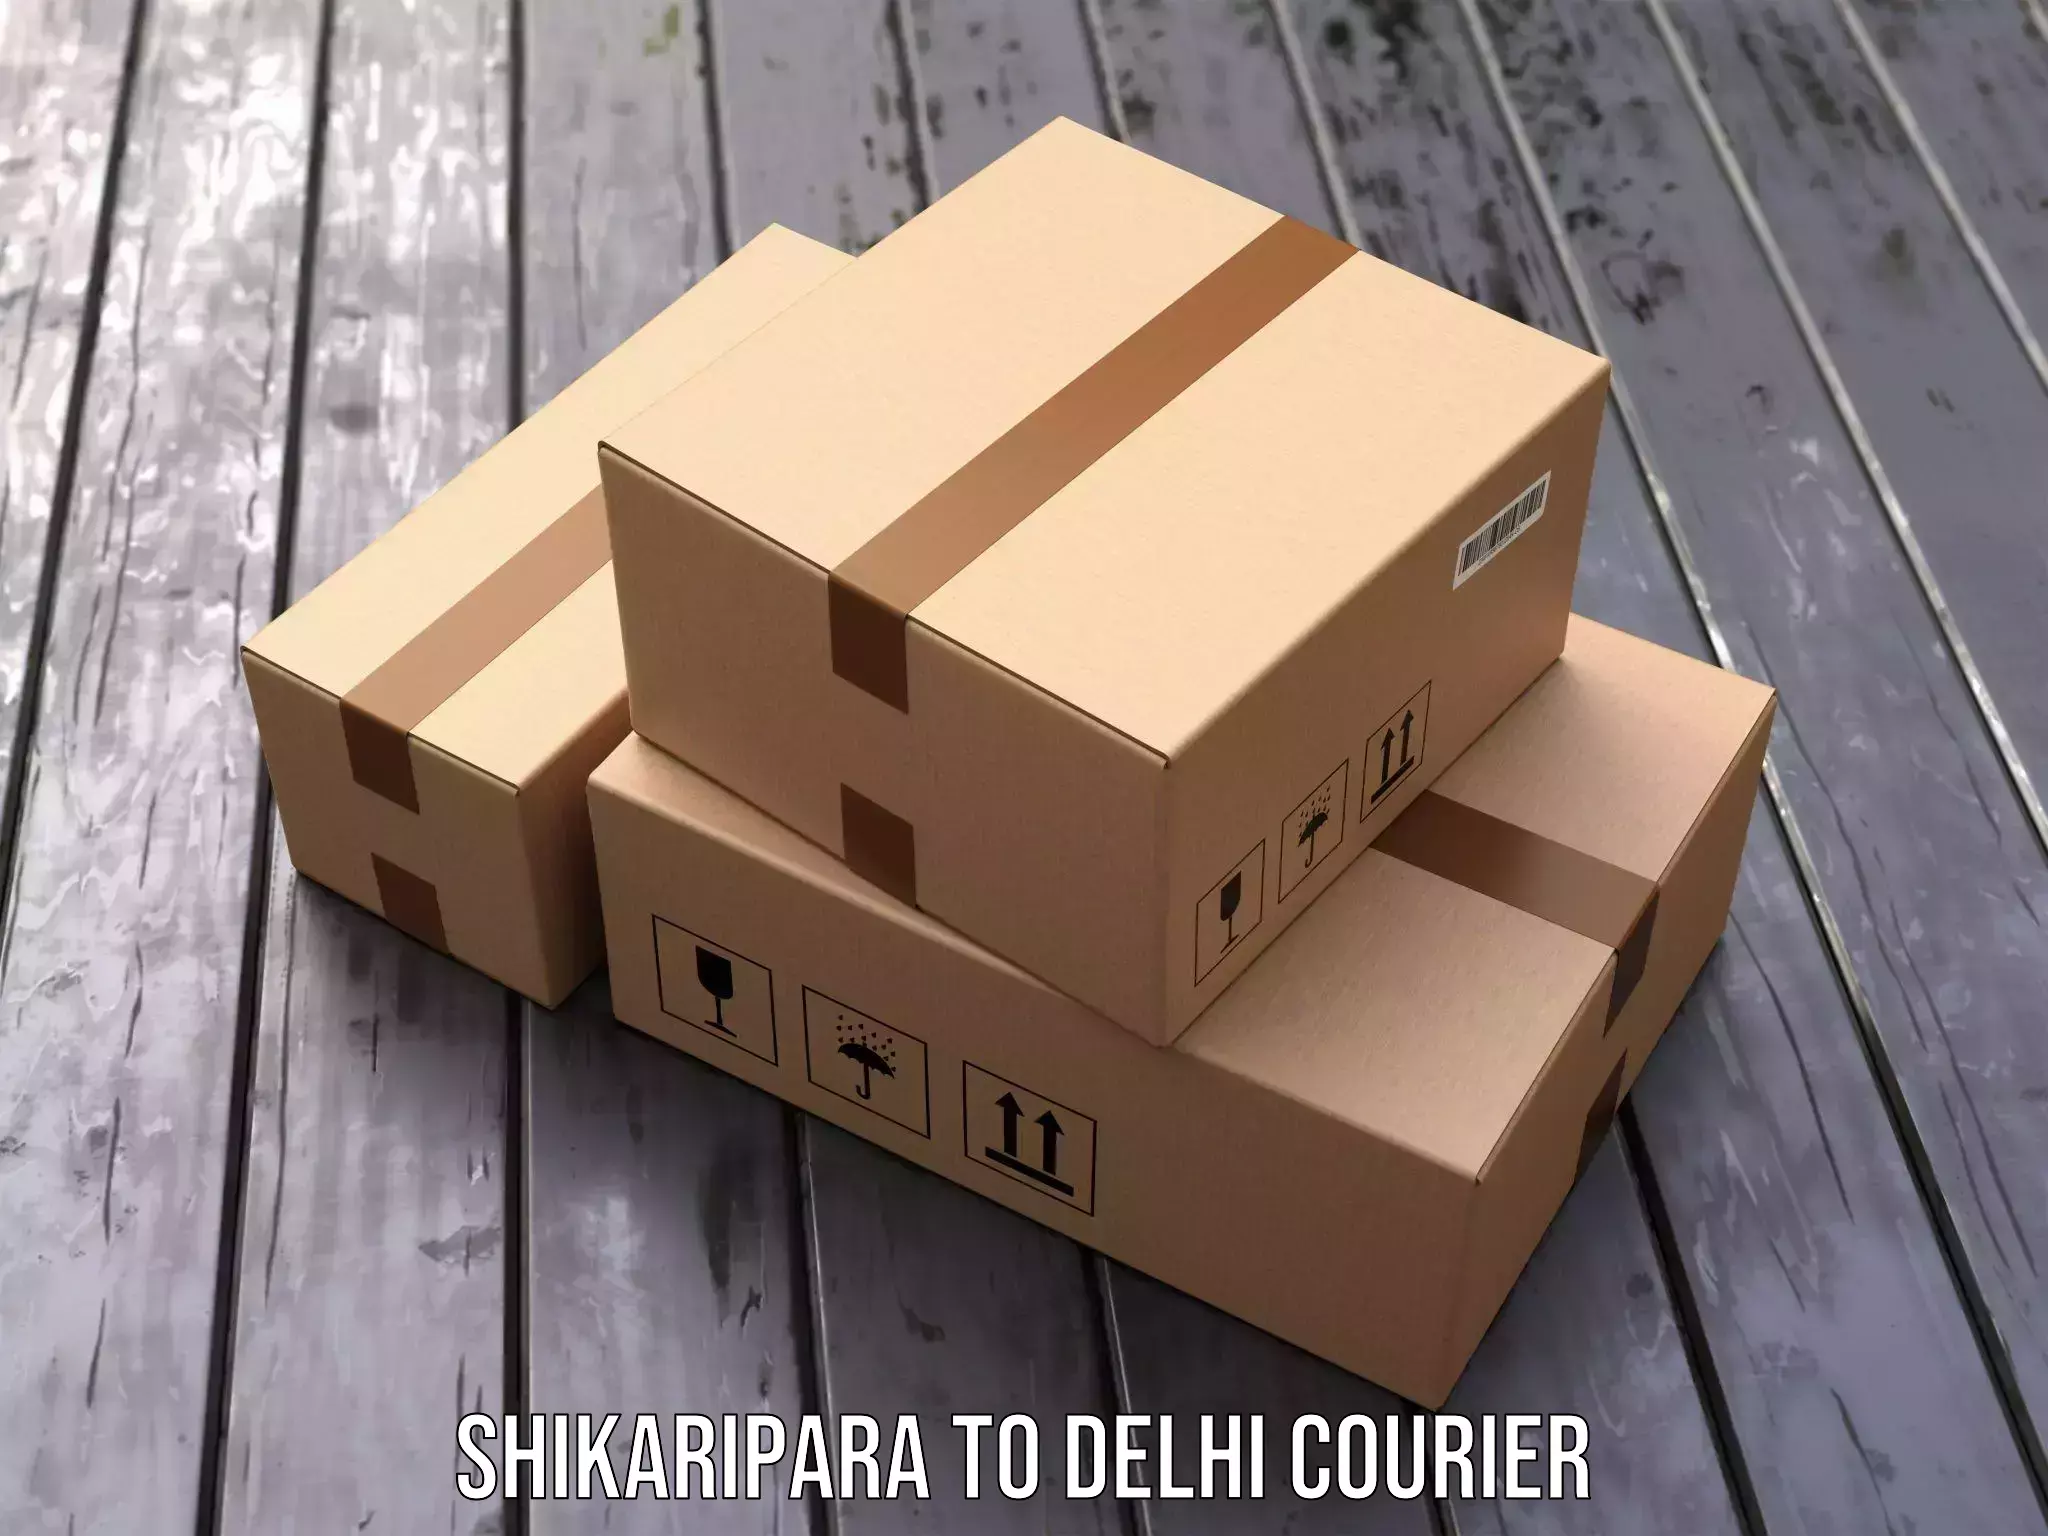 On-demand shipping options Shikaripara to Ramesh Nagar